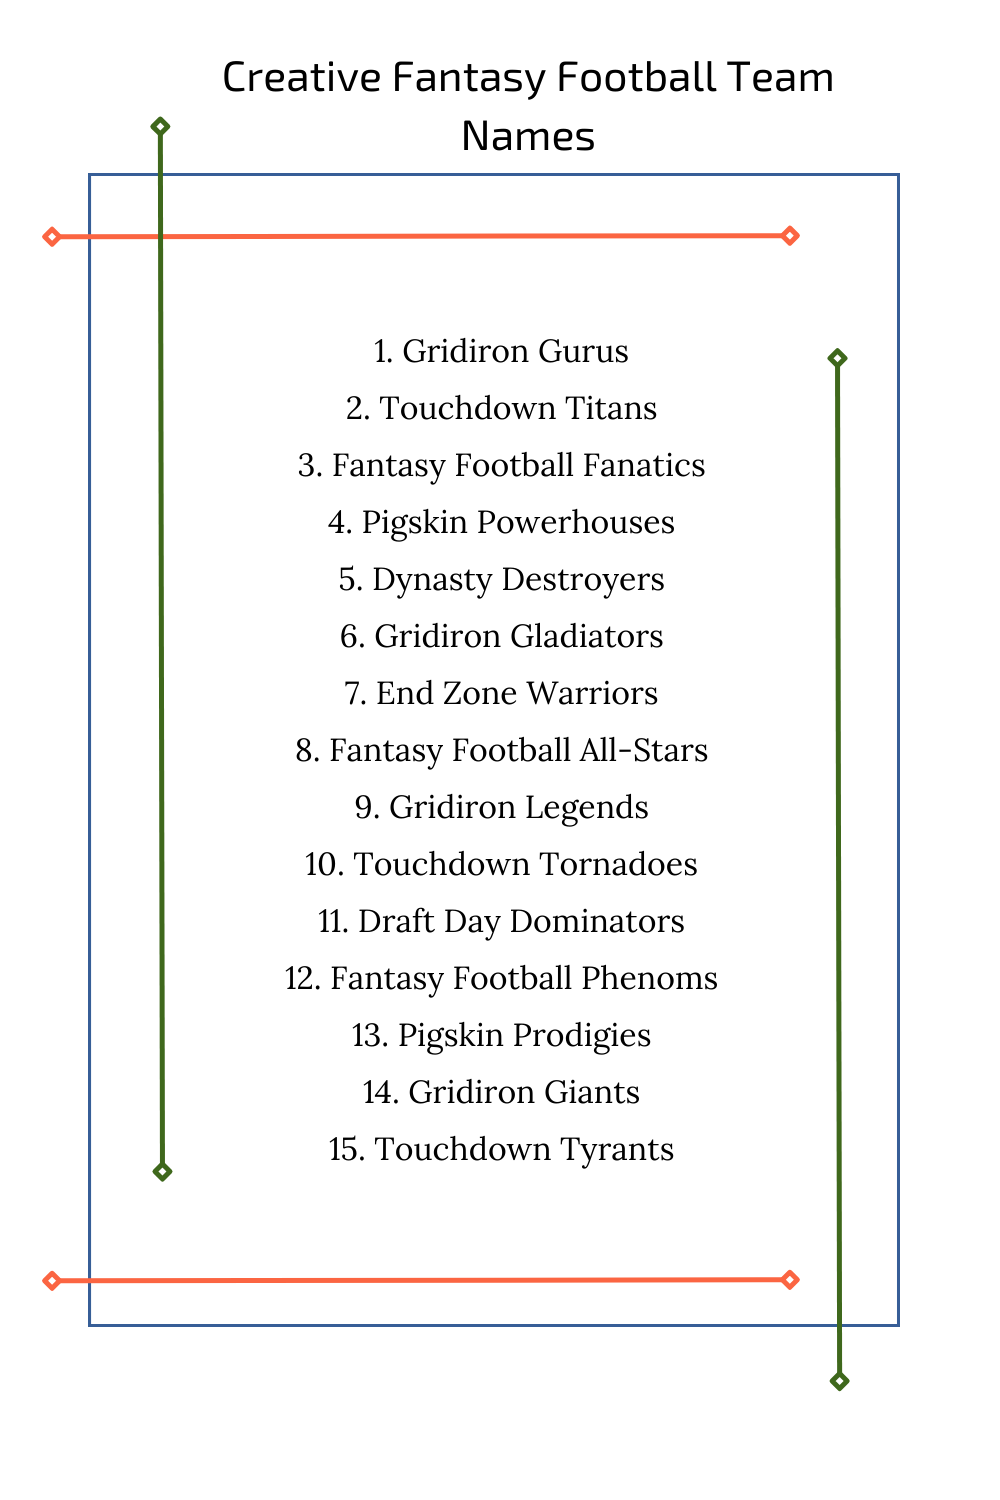 Creative Fantasy Football Team Names